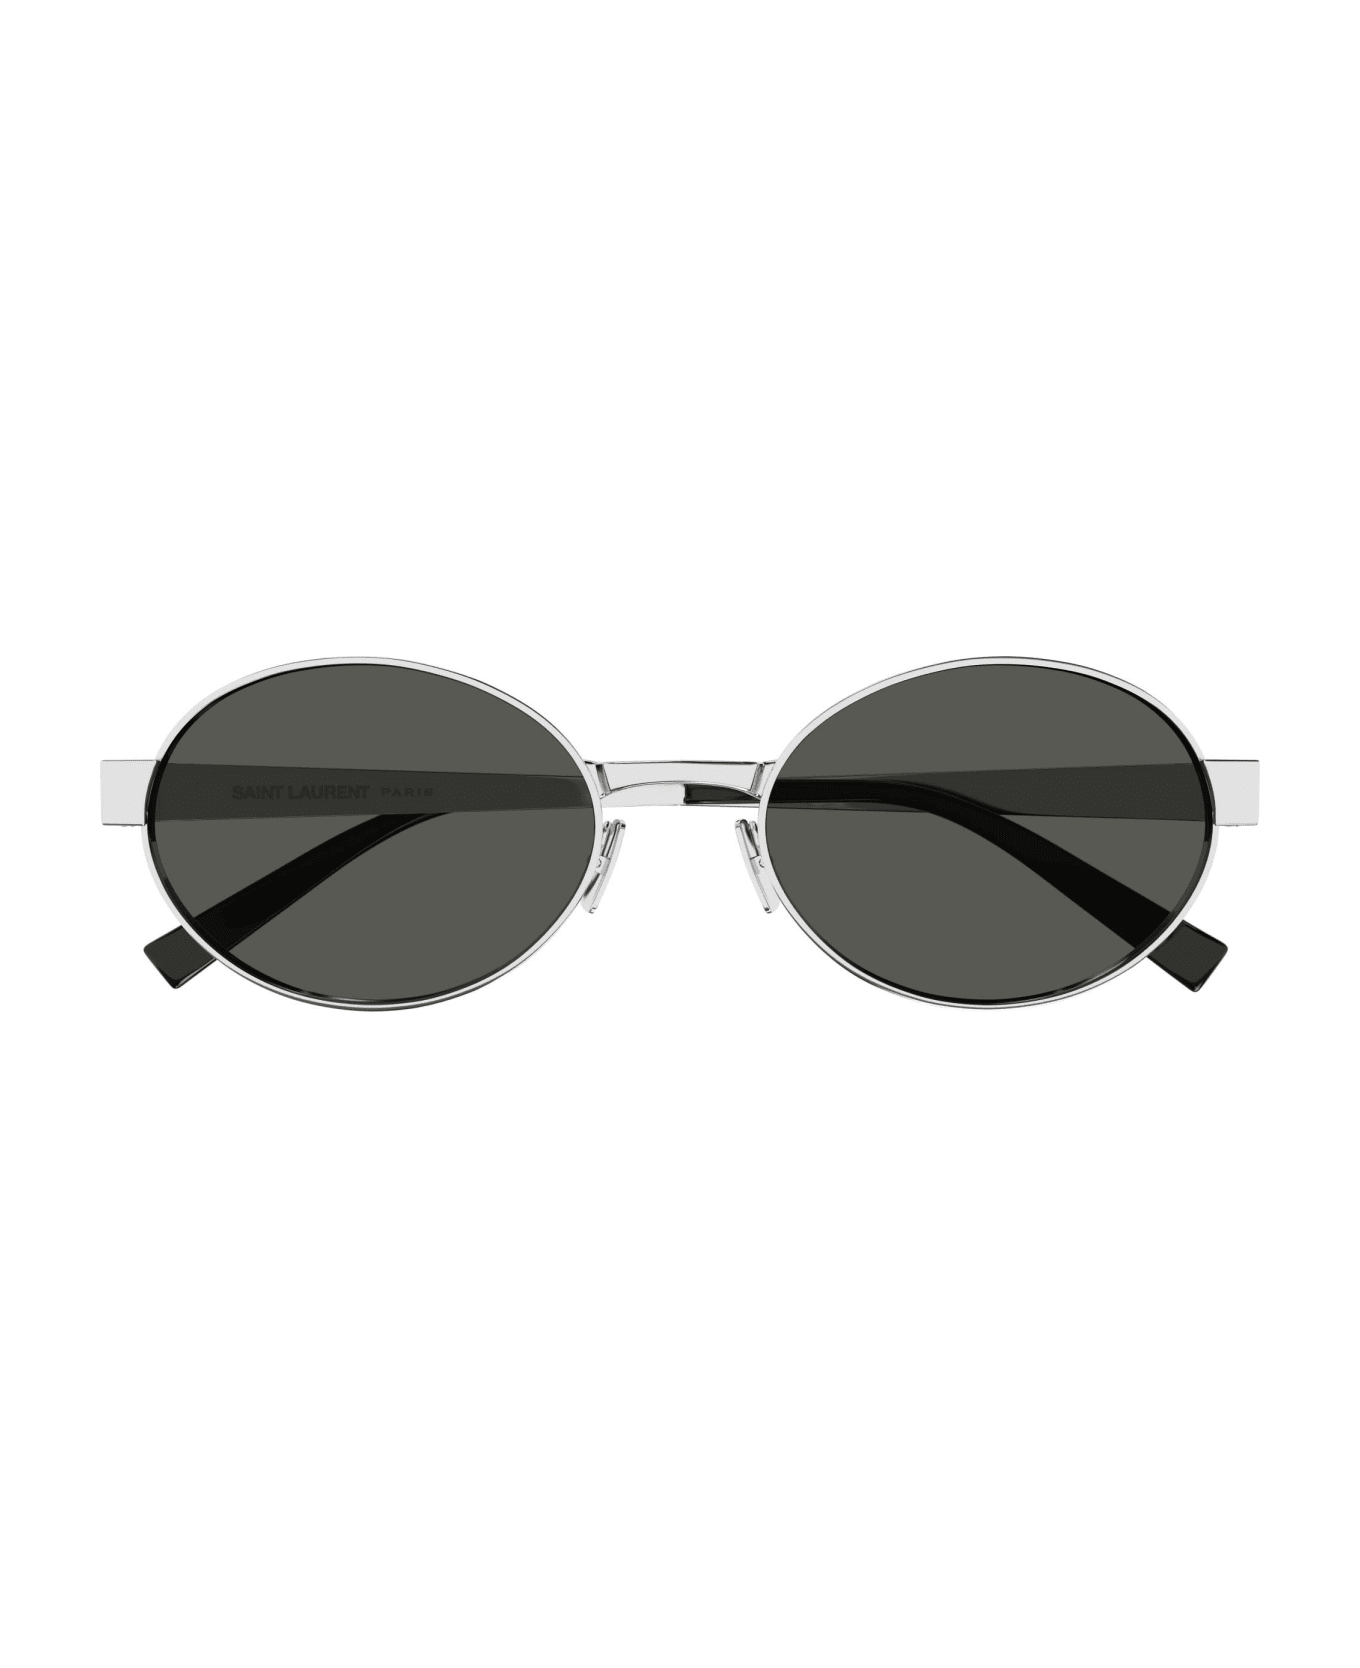 Saint Laurent Eyewear Sunglasses - Silver/Grigio